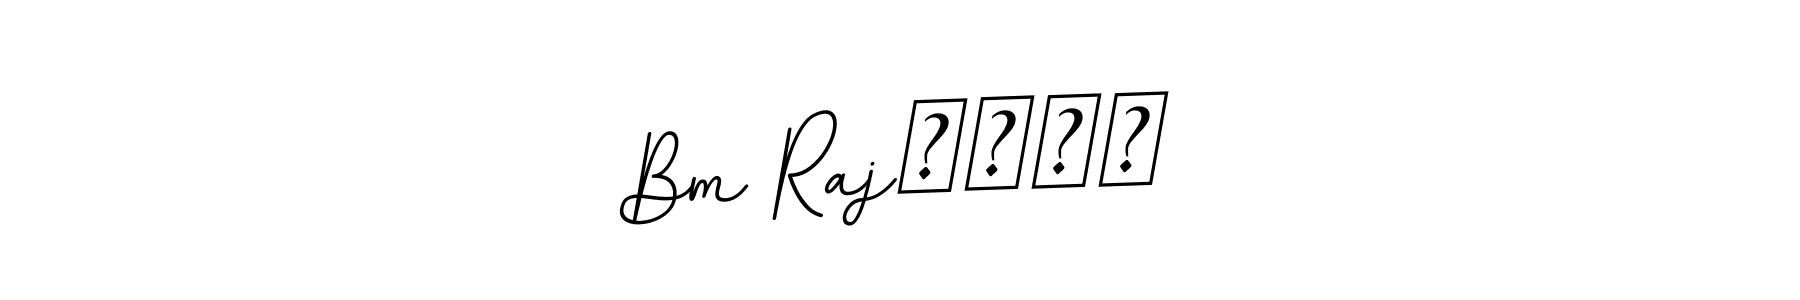 How to Draw Bm Rajगुरे signature style? BallpointsItalic-DORy9 is a latest design signature styles for name Bm Rajगुरे. Bm Rajगुरे signature style 11 images and pictures png